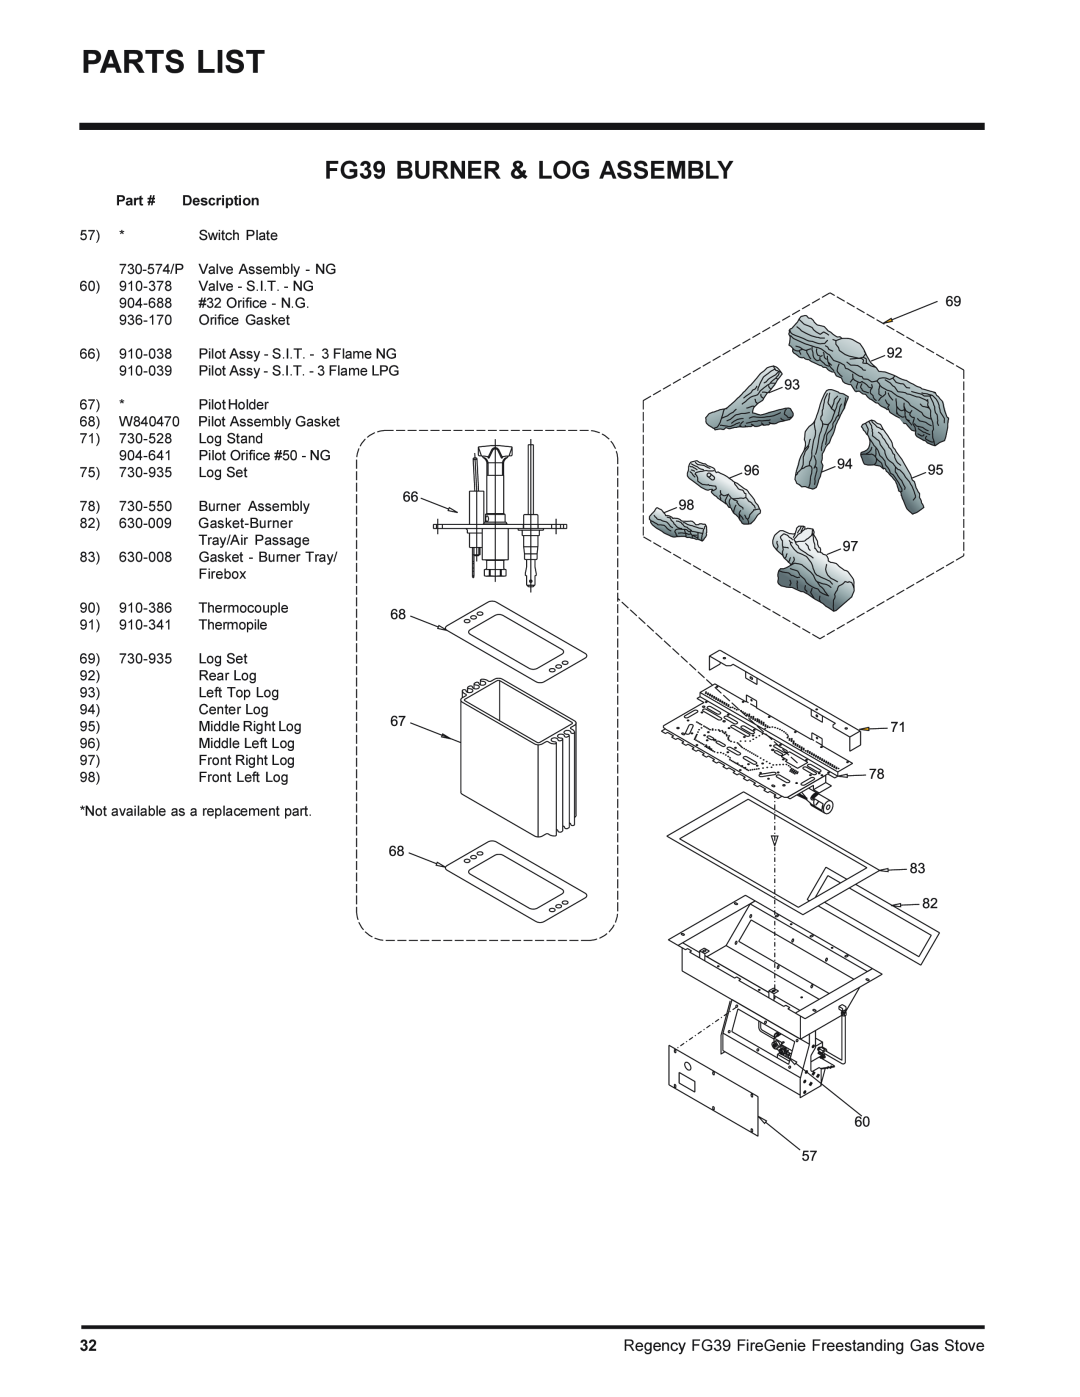 Regency FG39-LPG, FG39-NG installation manual FG39 BURNER & LOG ASSEMBLY, Regency FG39 FireGenie Freestanding Gas Stove 